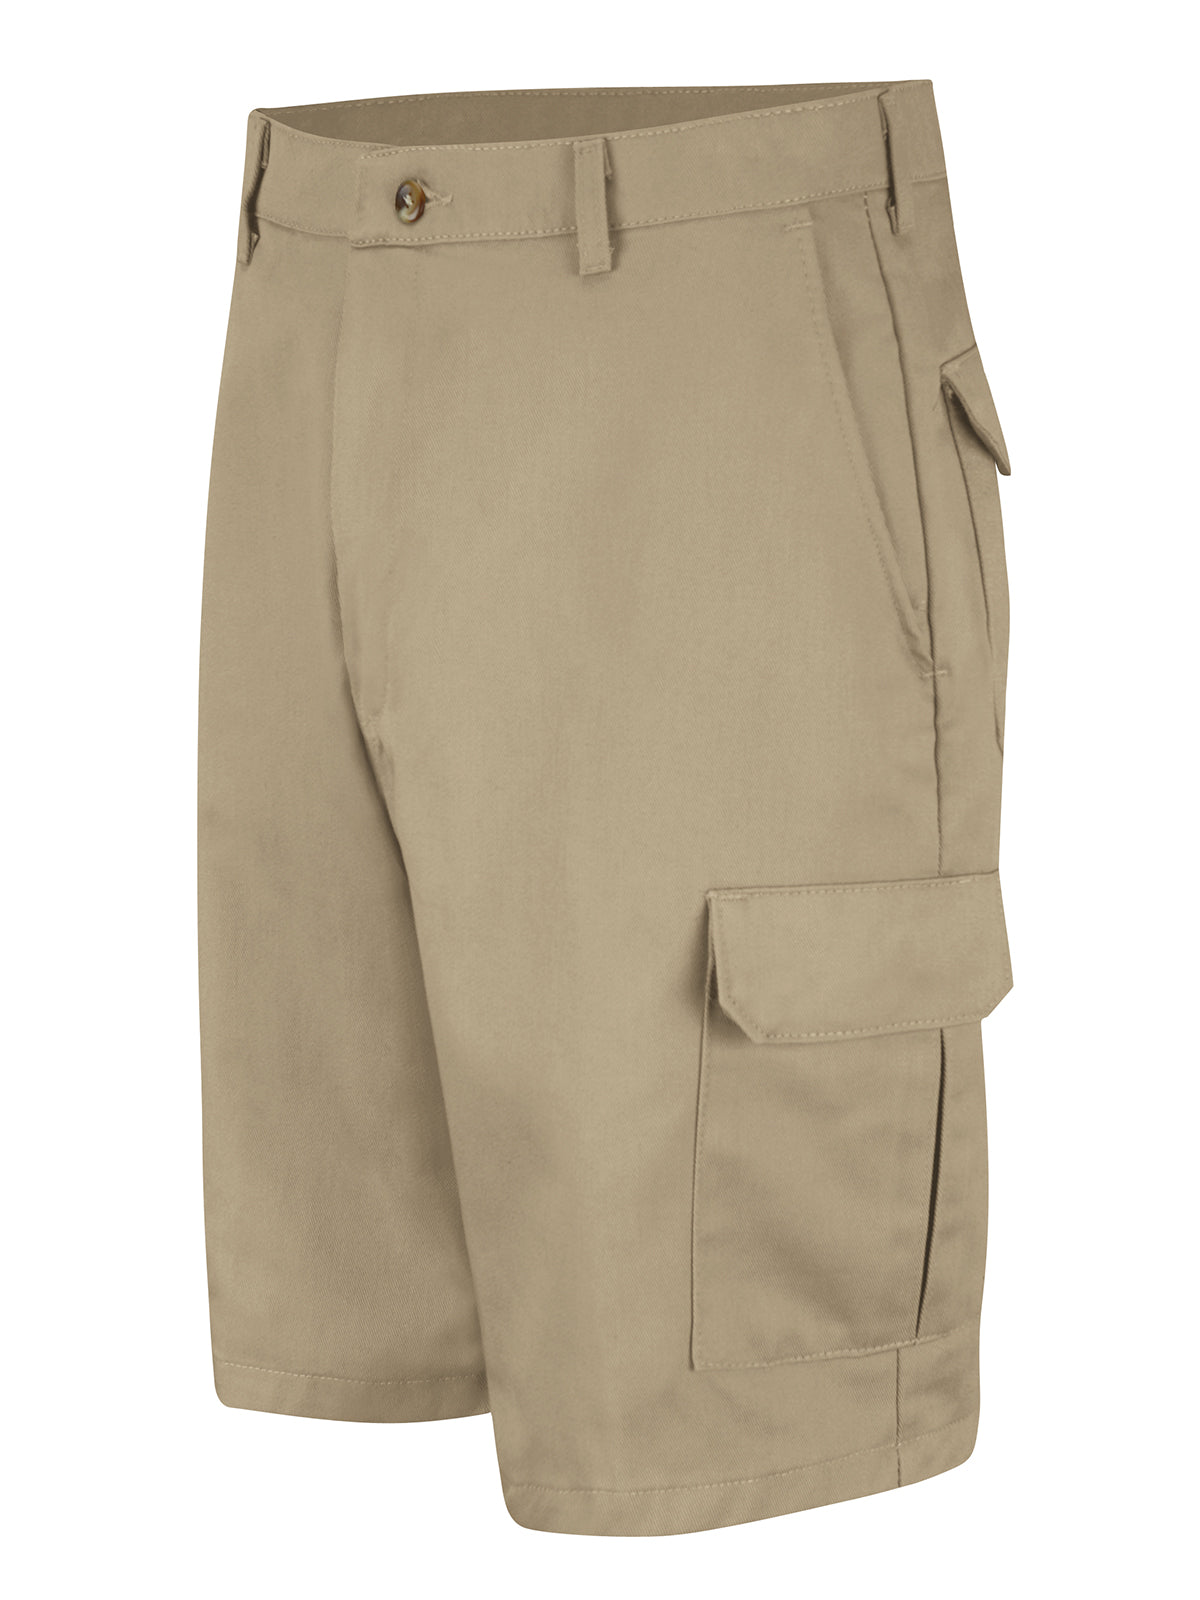 Men's Cargo Shorts - PC86 - Khaki